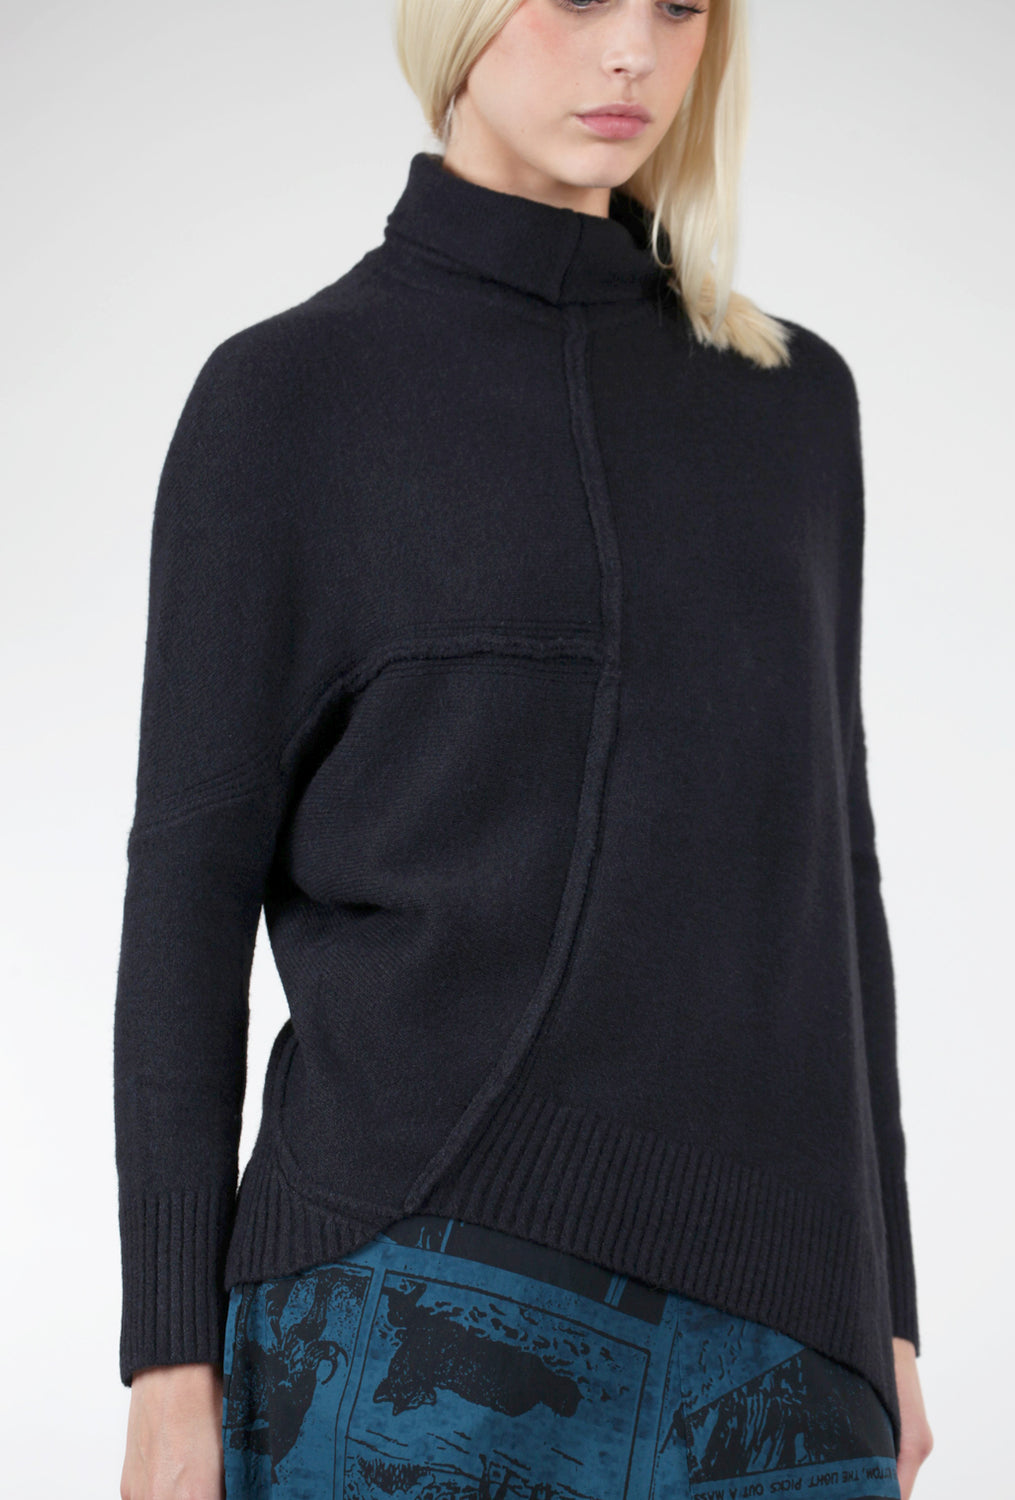 Asym Turtleneck Sweater, Black